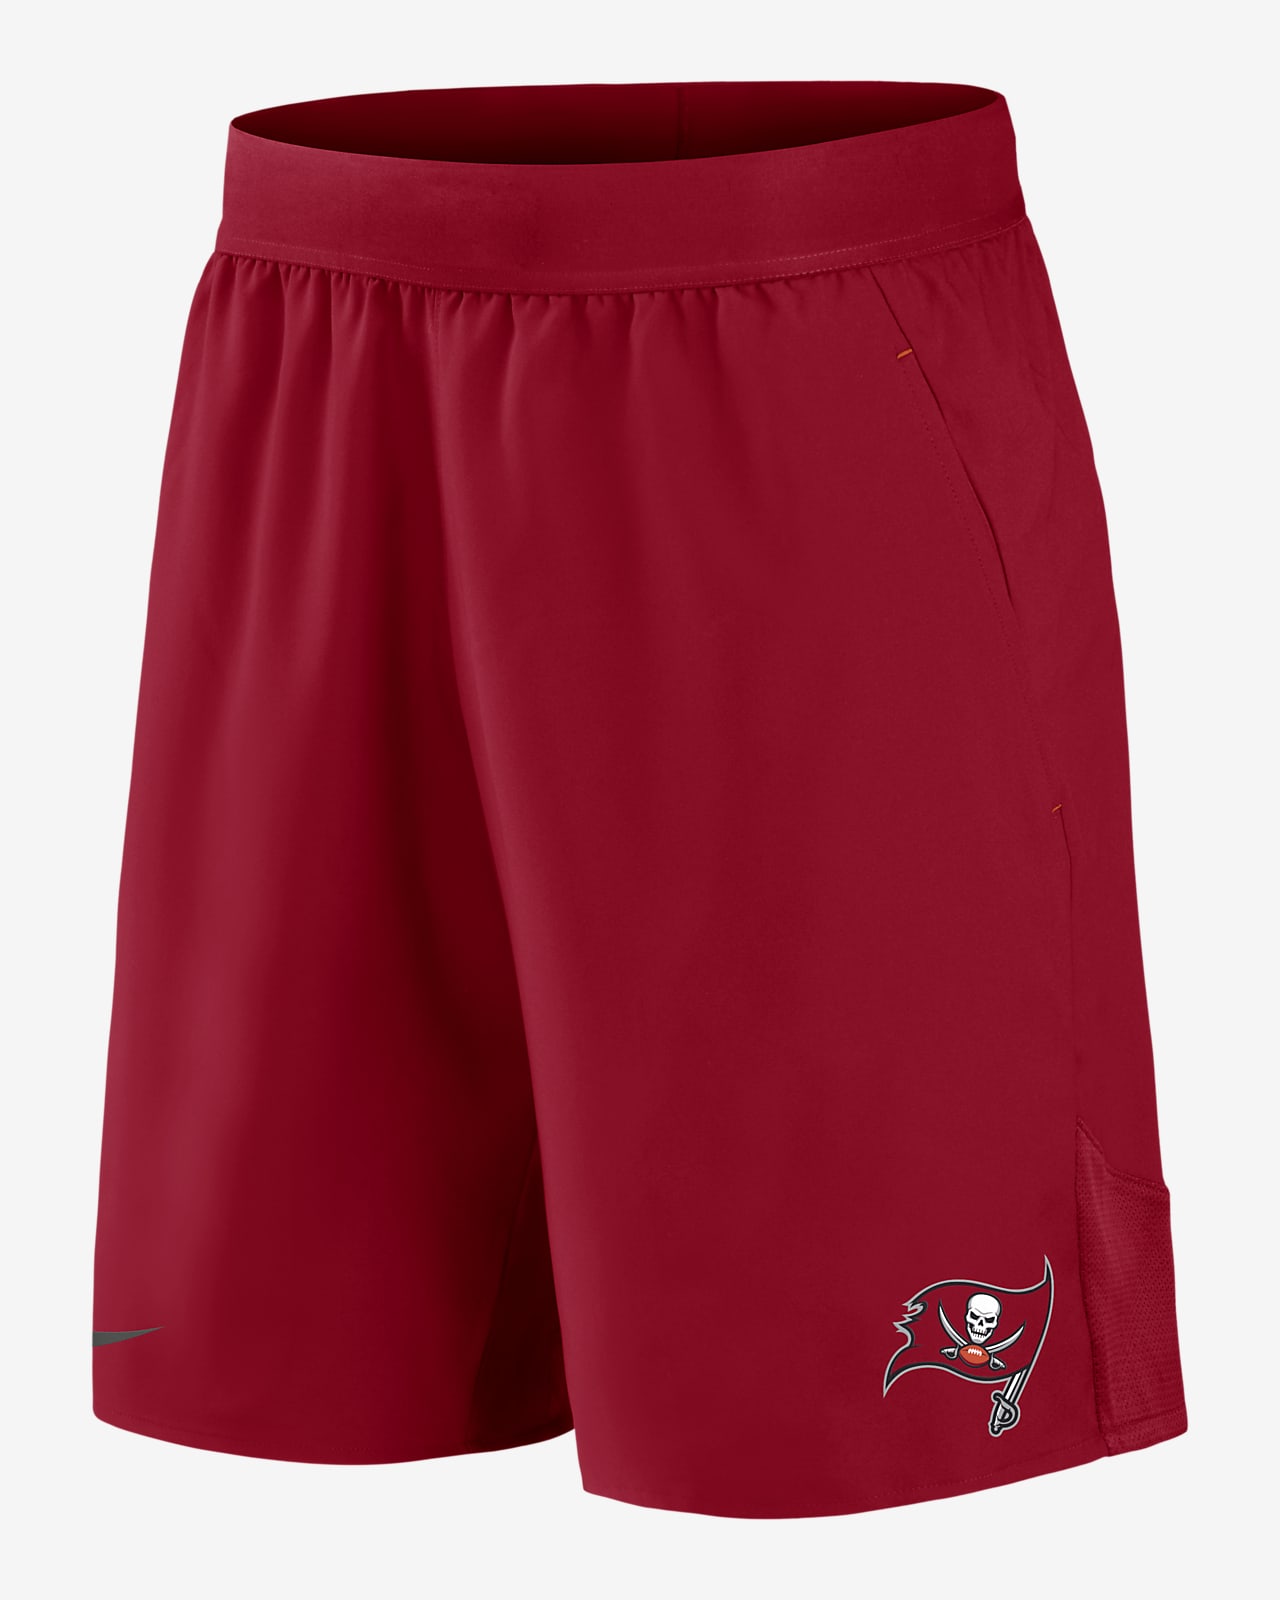 CSU Buccaneers Nike Dri-Fit Baseball Pants Men's Navy/Cream Used M